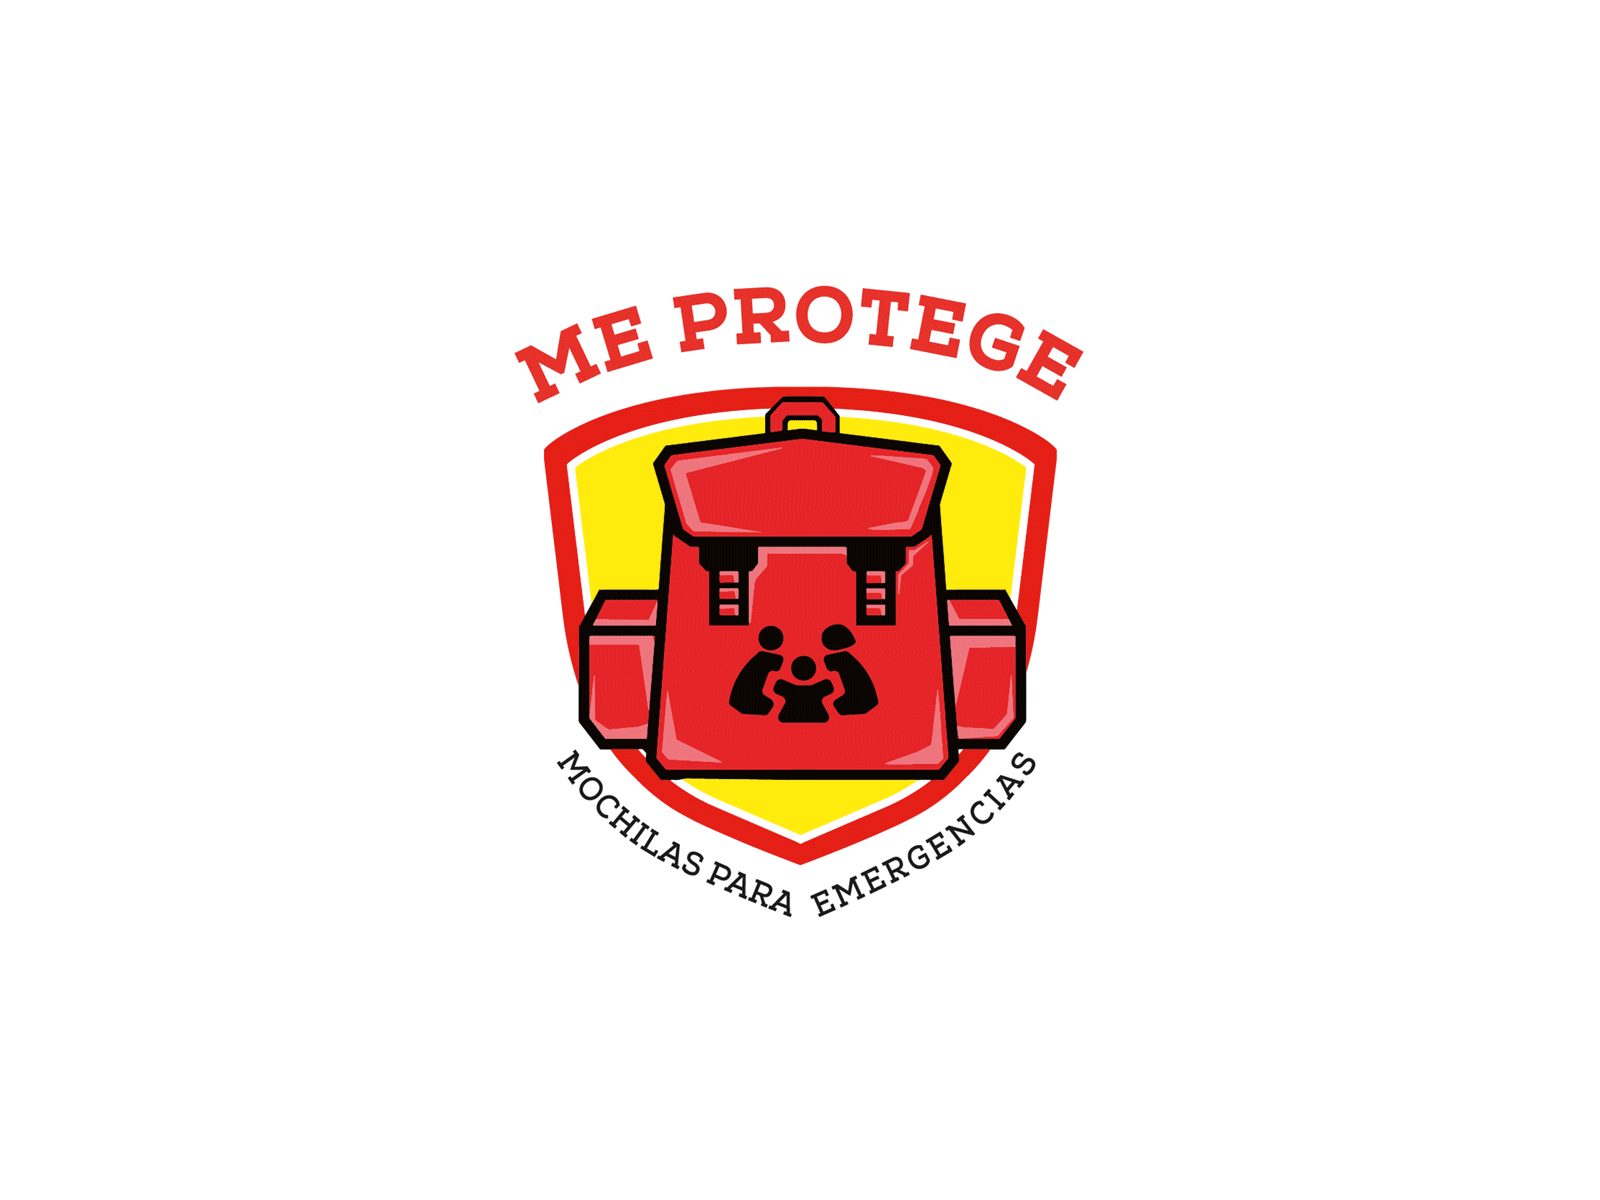 Me protege mochilas de emergencia design emergency logo mochila prevention terremoto